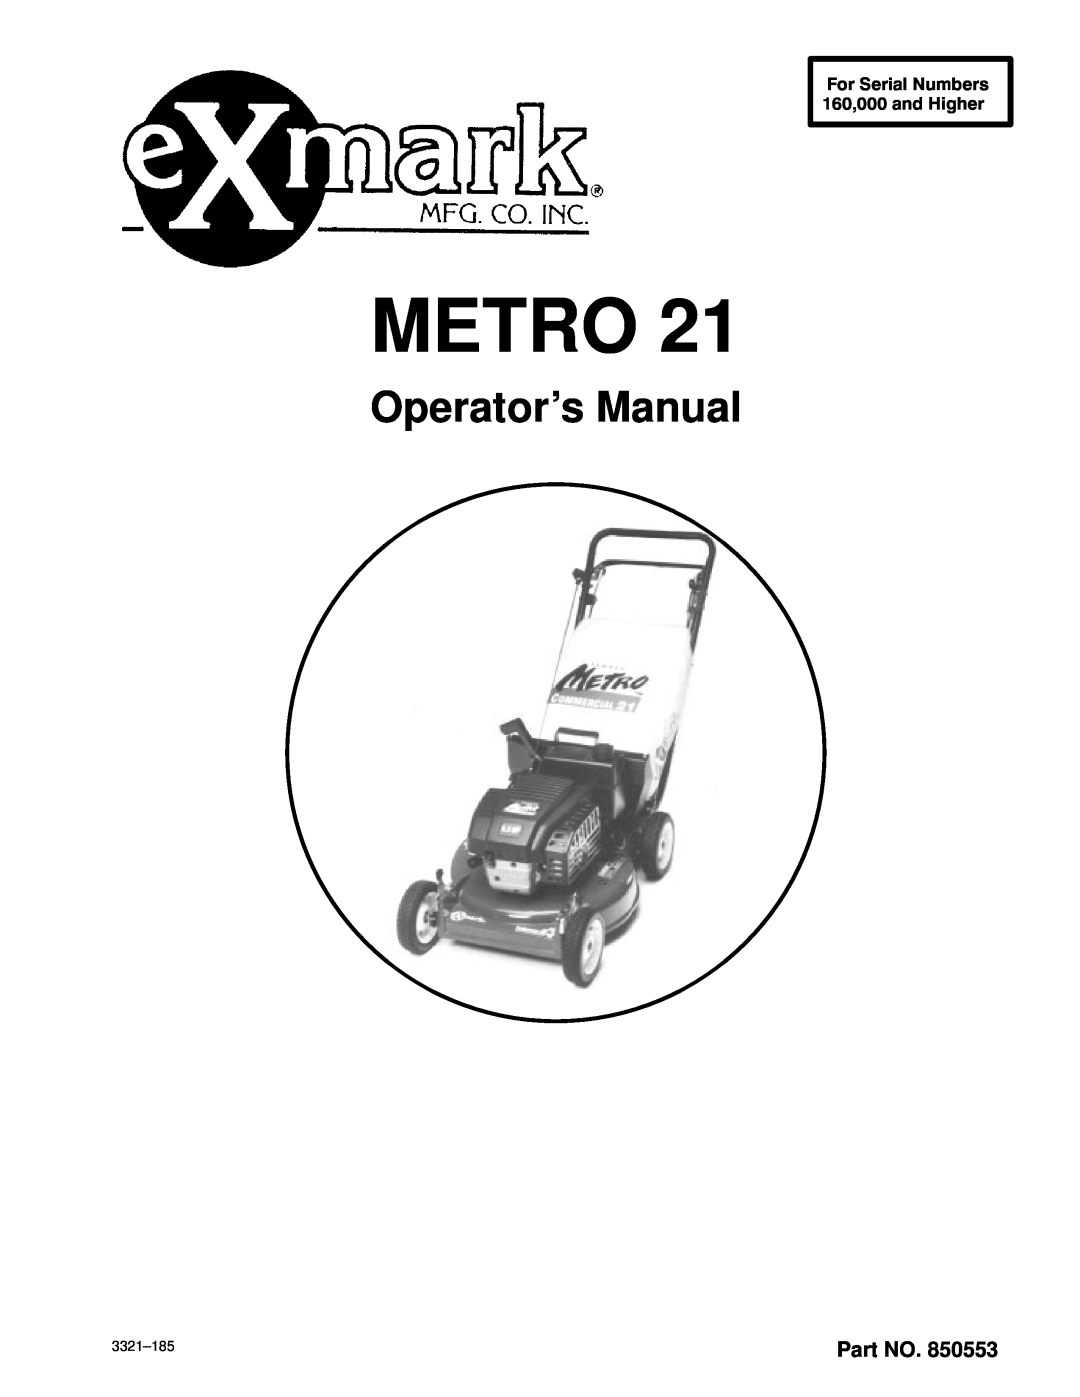 Exmark M217B, M217b, M217bsp manual Operators Manual, Metro, Sea e a e, 3321±185 